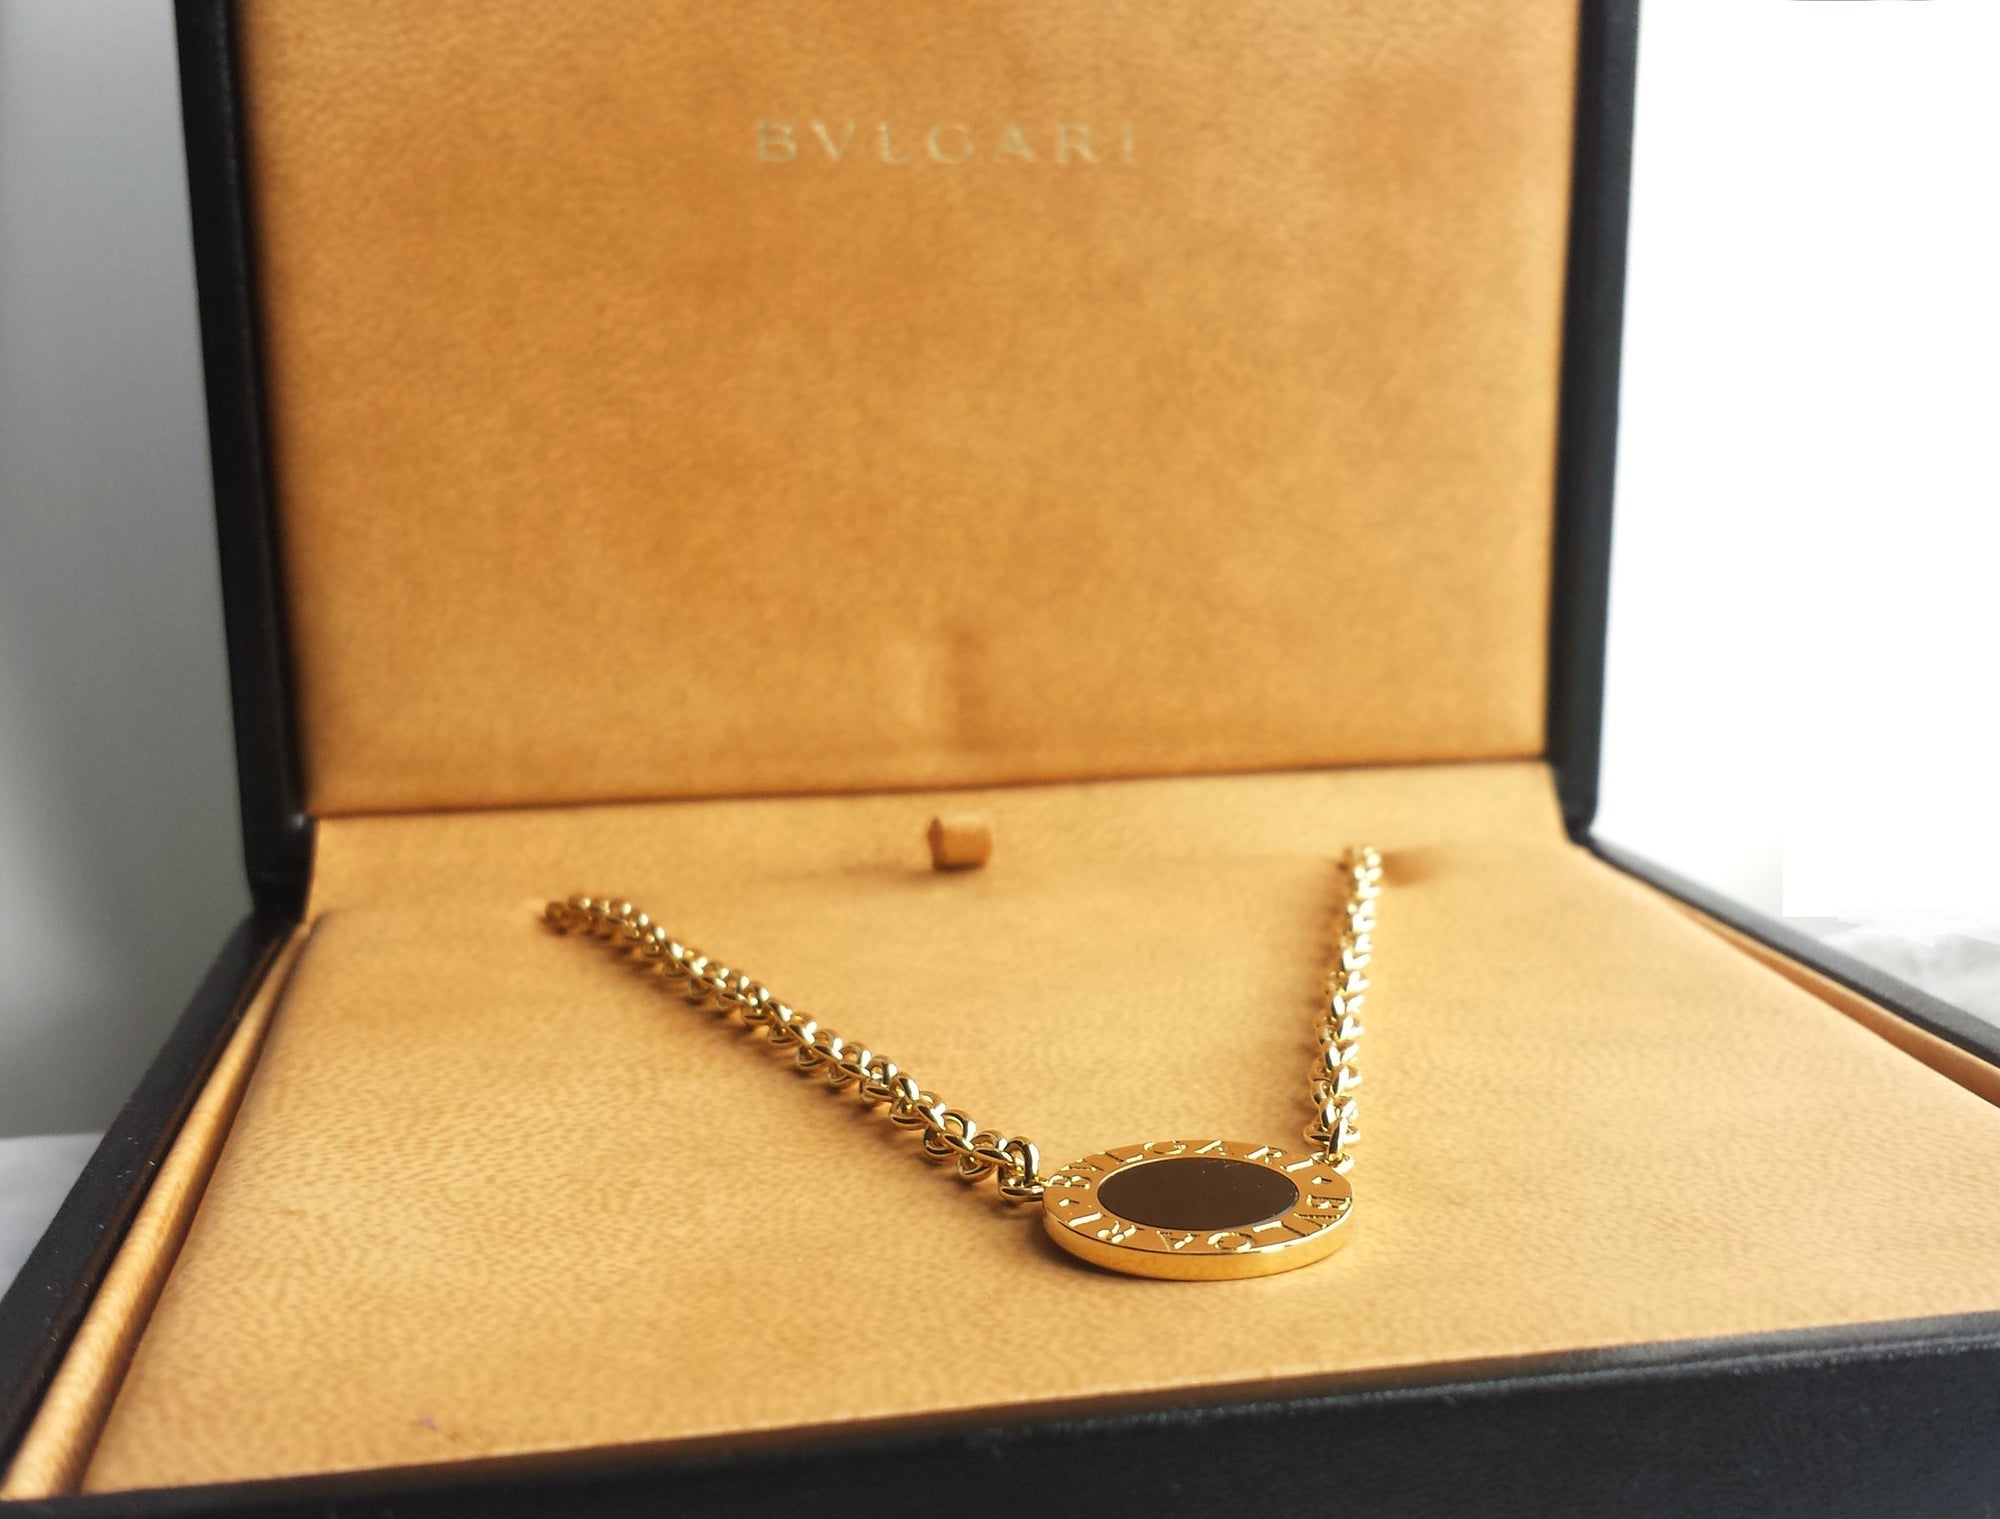 Bulgari Bvlgari Necklace in 18K Yellow Gold & Onyx, 16 inches